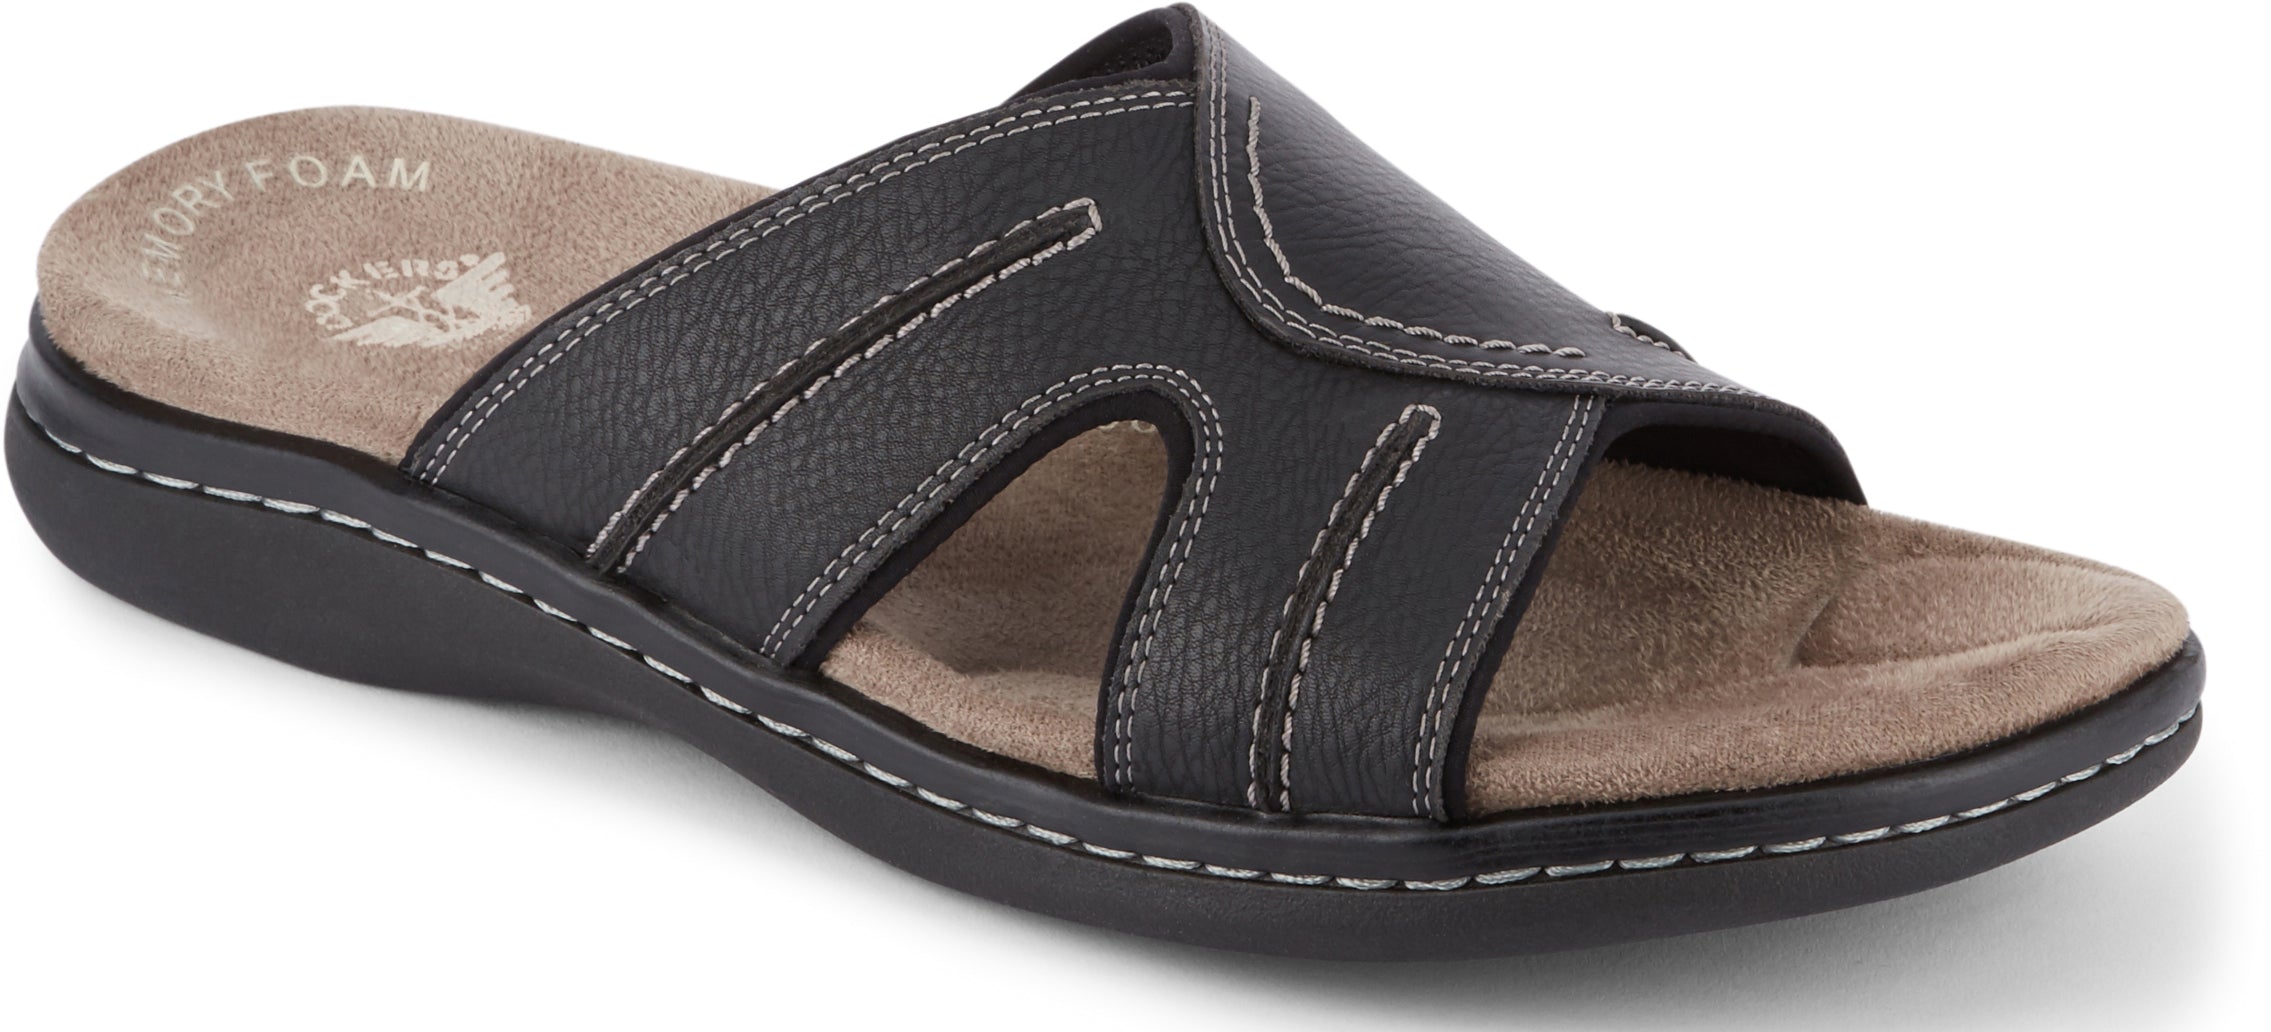 Dockers Footwear Men's Sunland Slide Sandal in Black Side Angle View